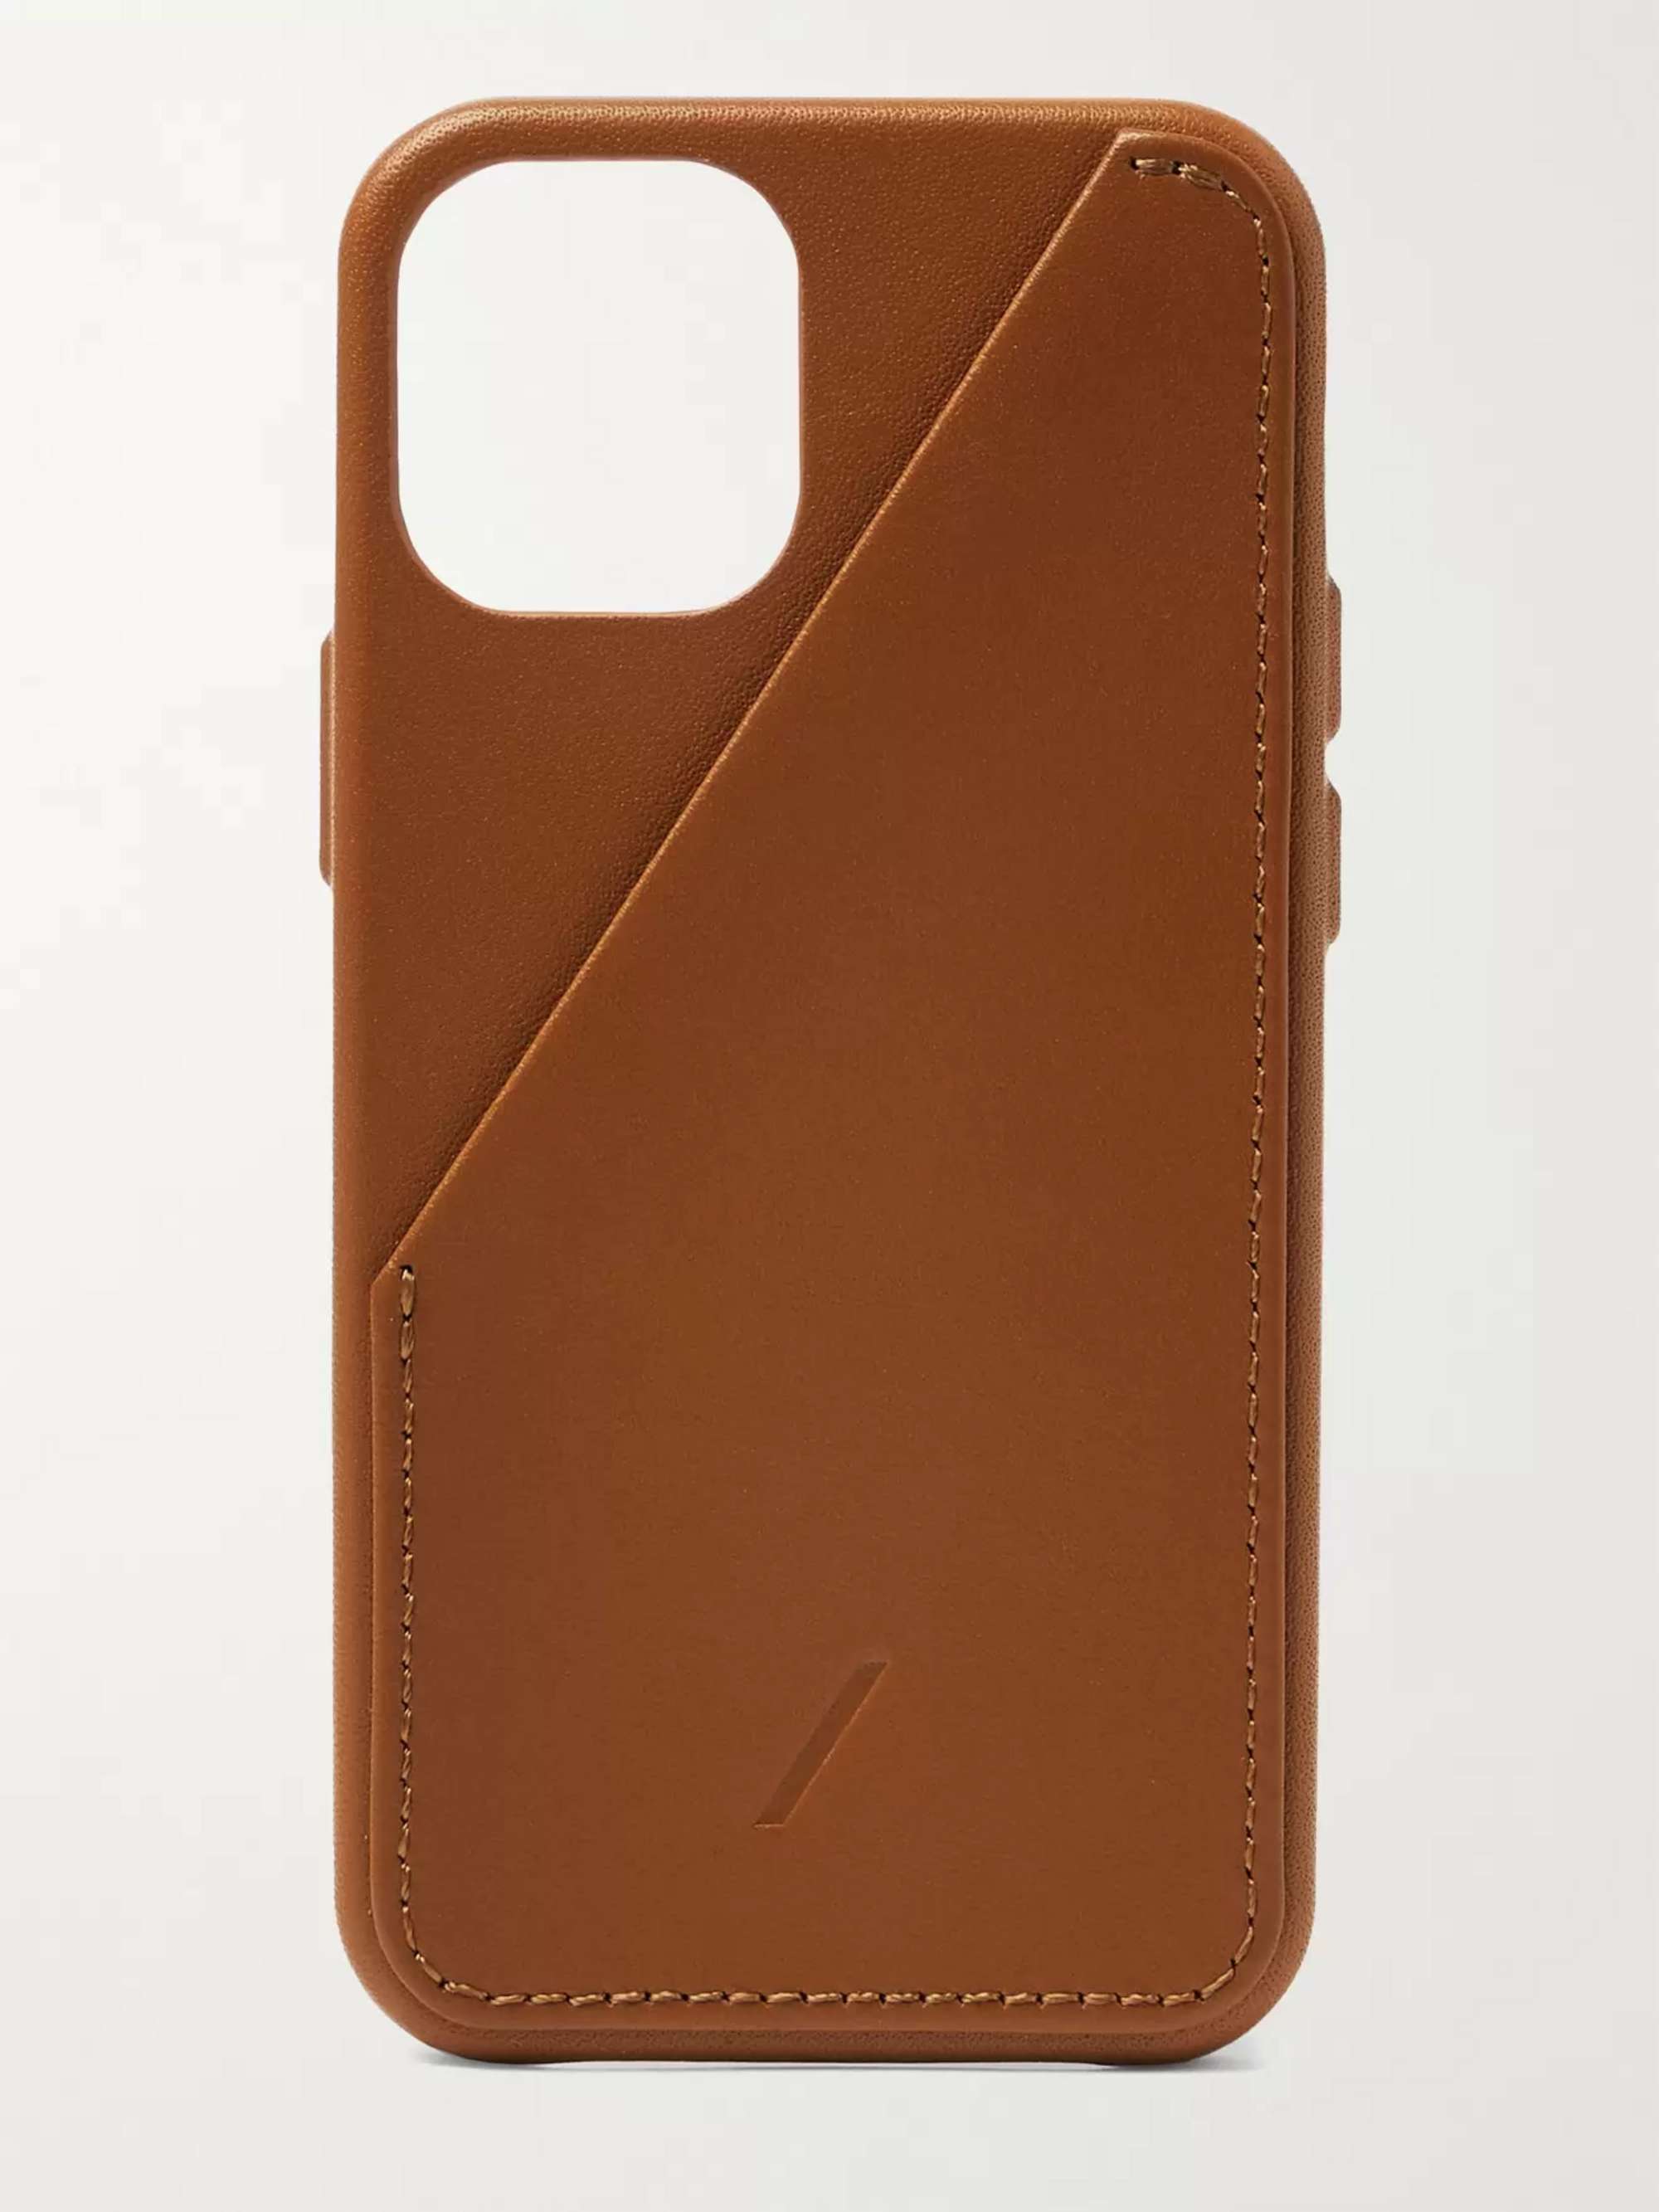 NATIVE UNION Clic Card Leather iPhone 12 Pro Case